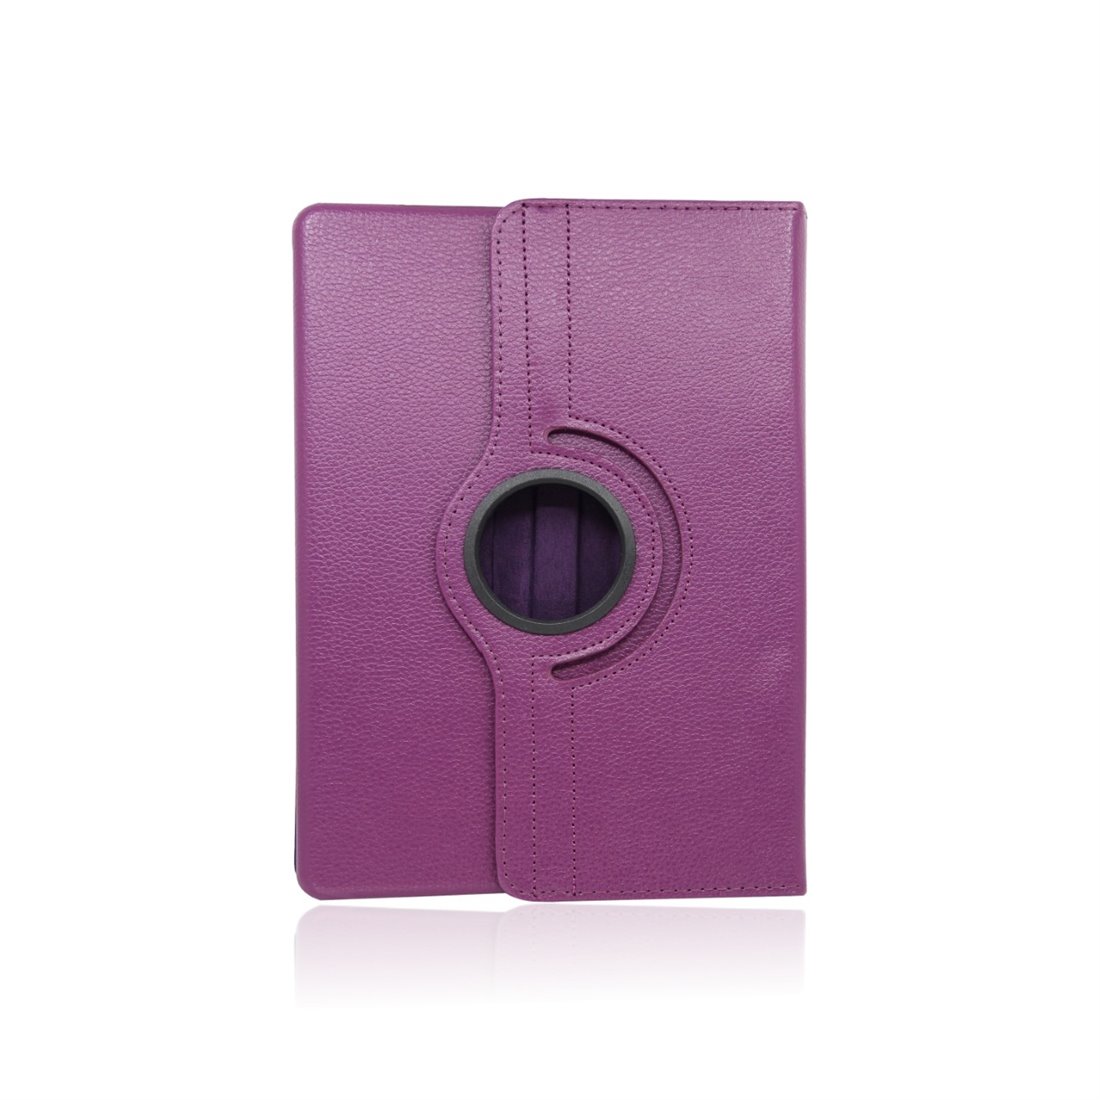 Universal tablet case 10.1 inch purple